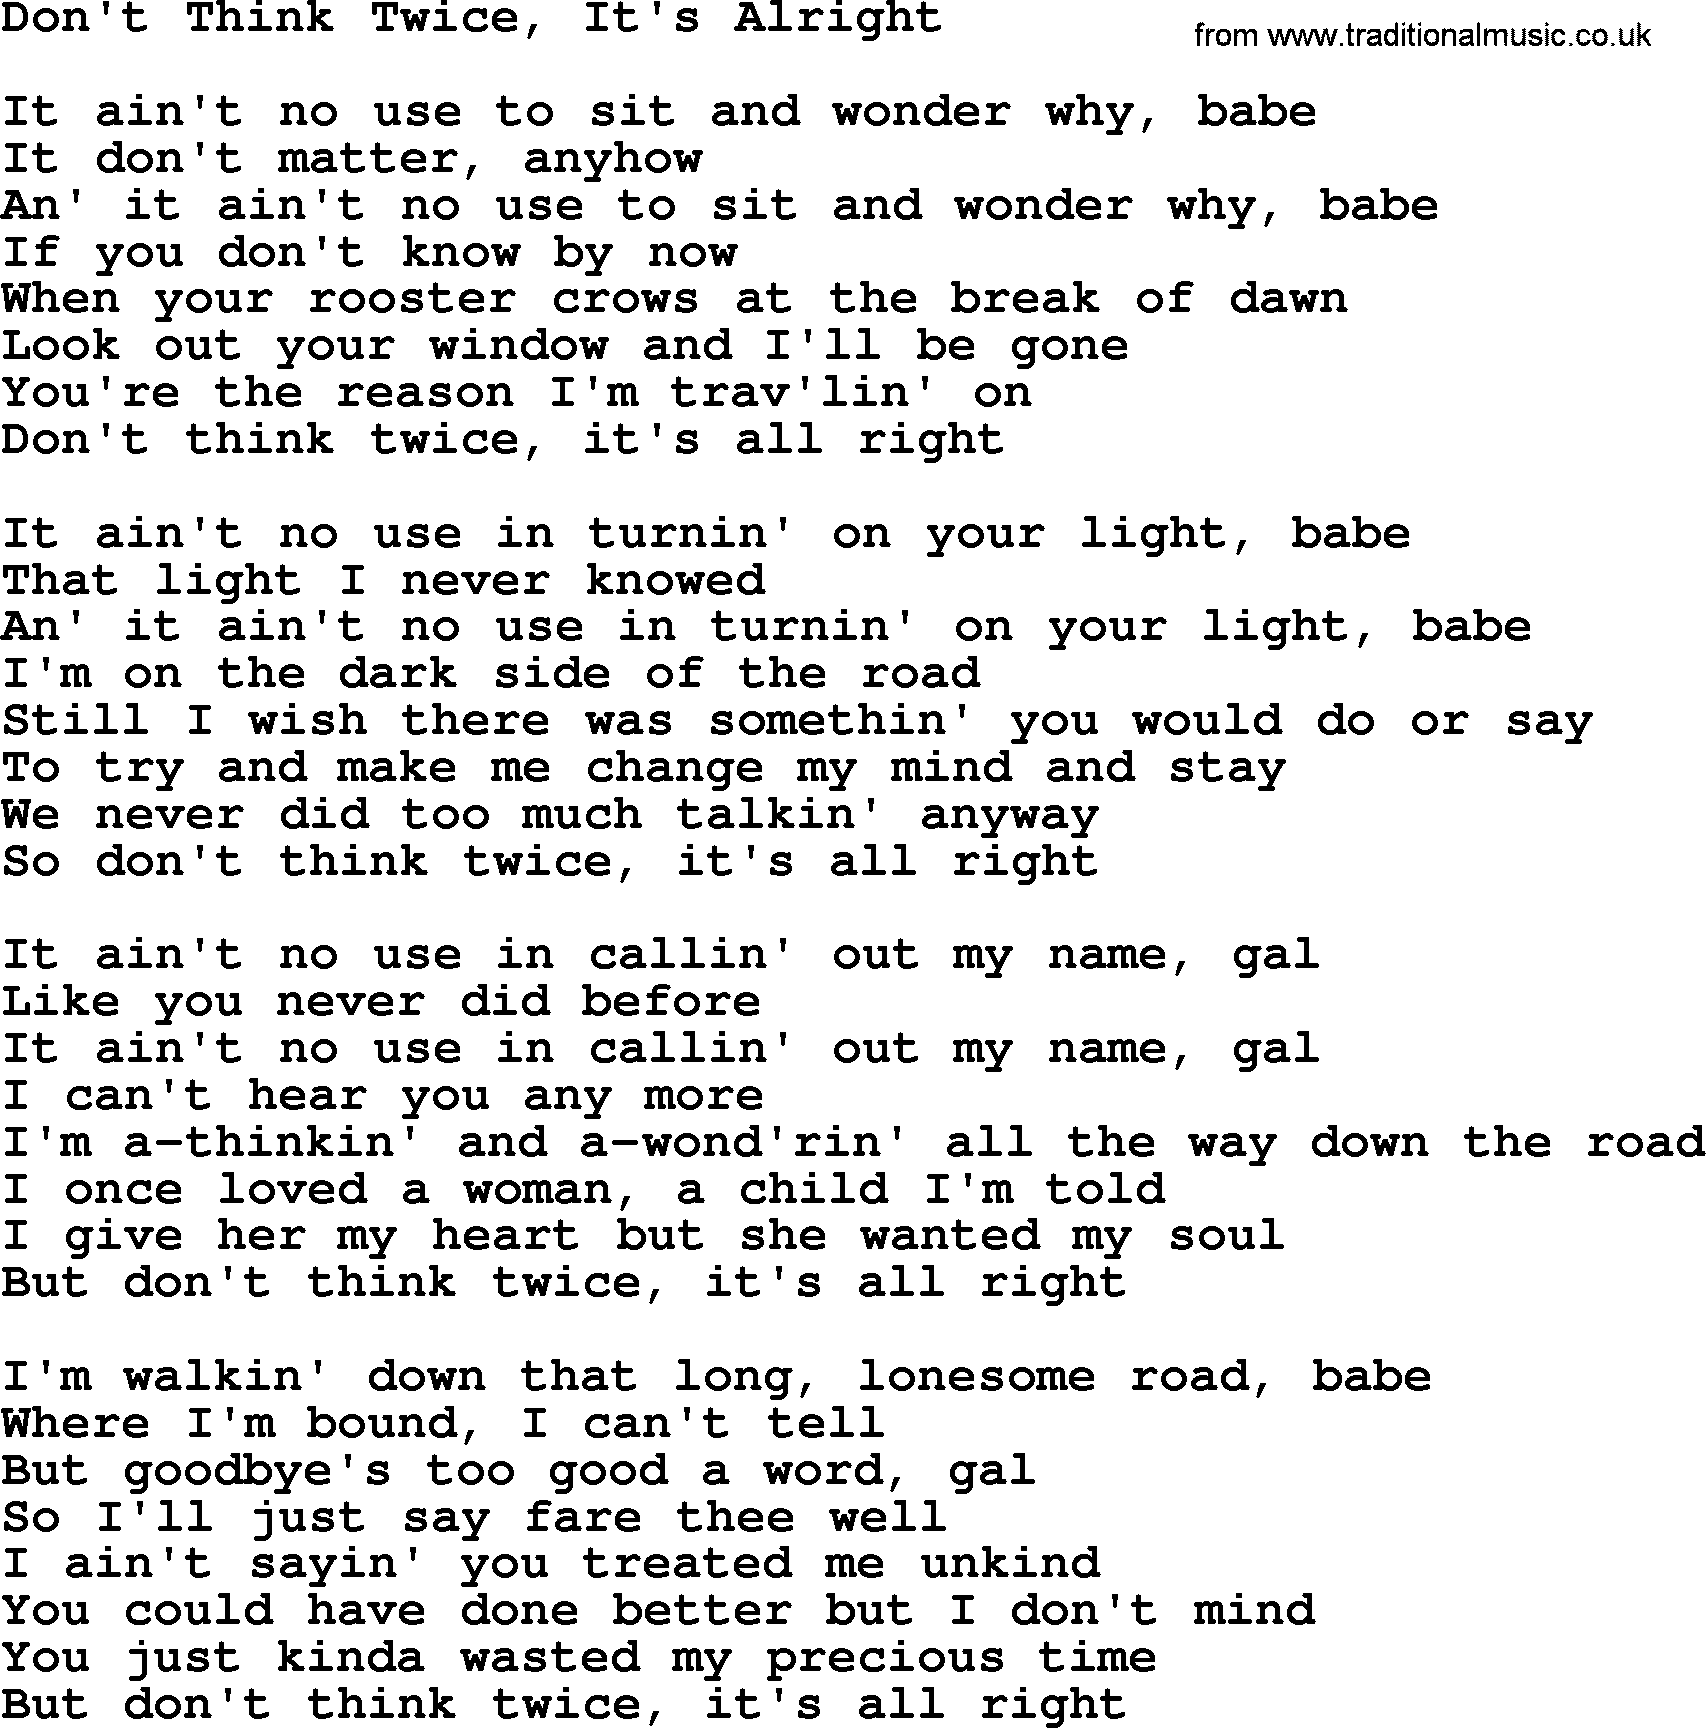 Joan Baez song Don't Think Twice, It's Alright, lyrics